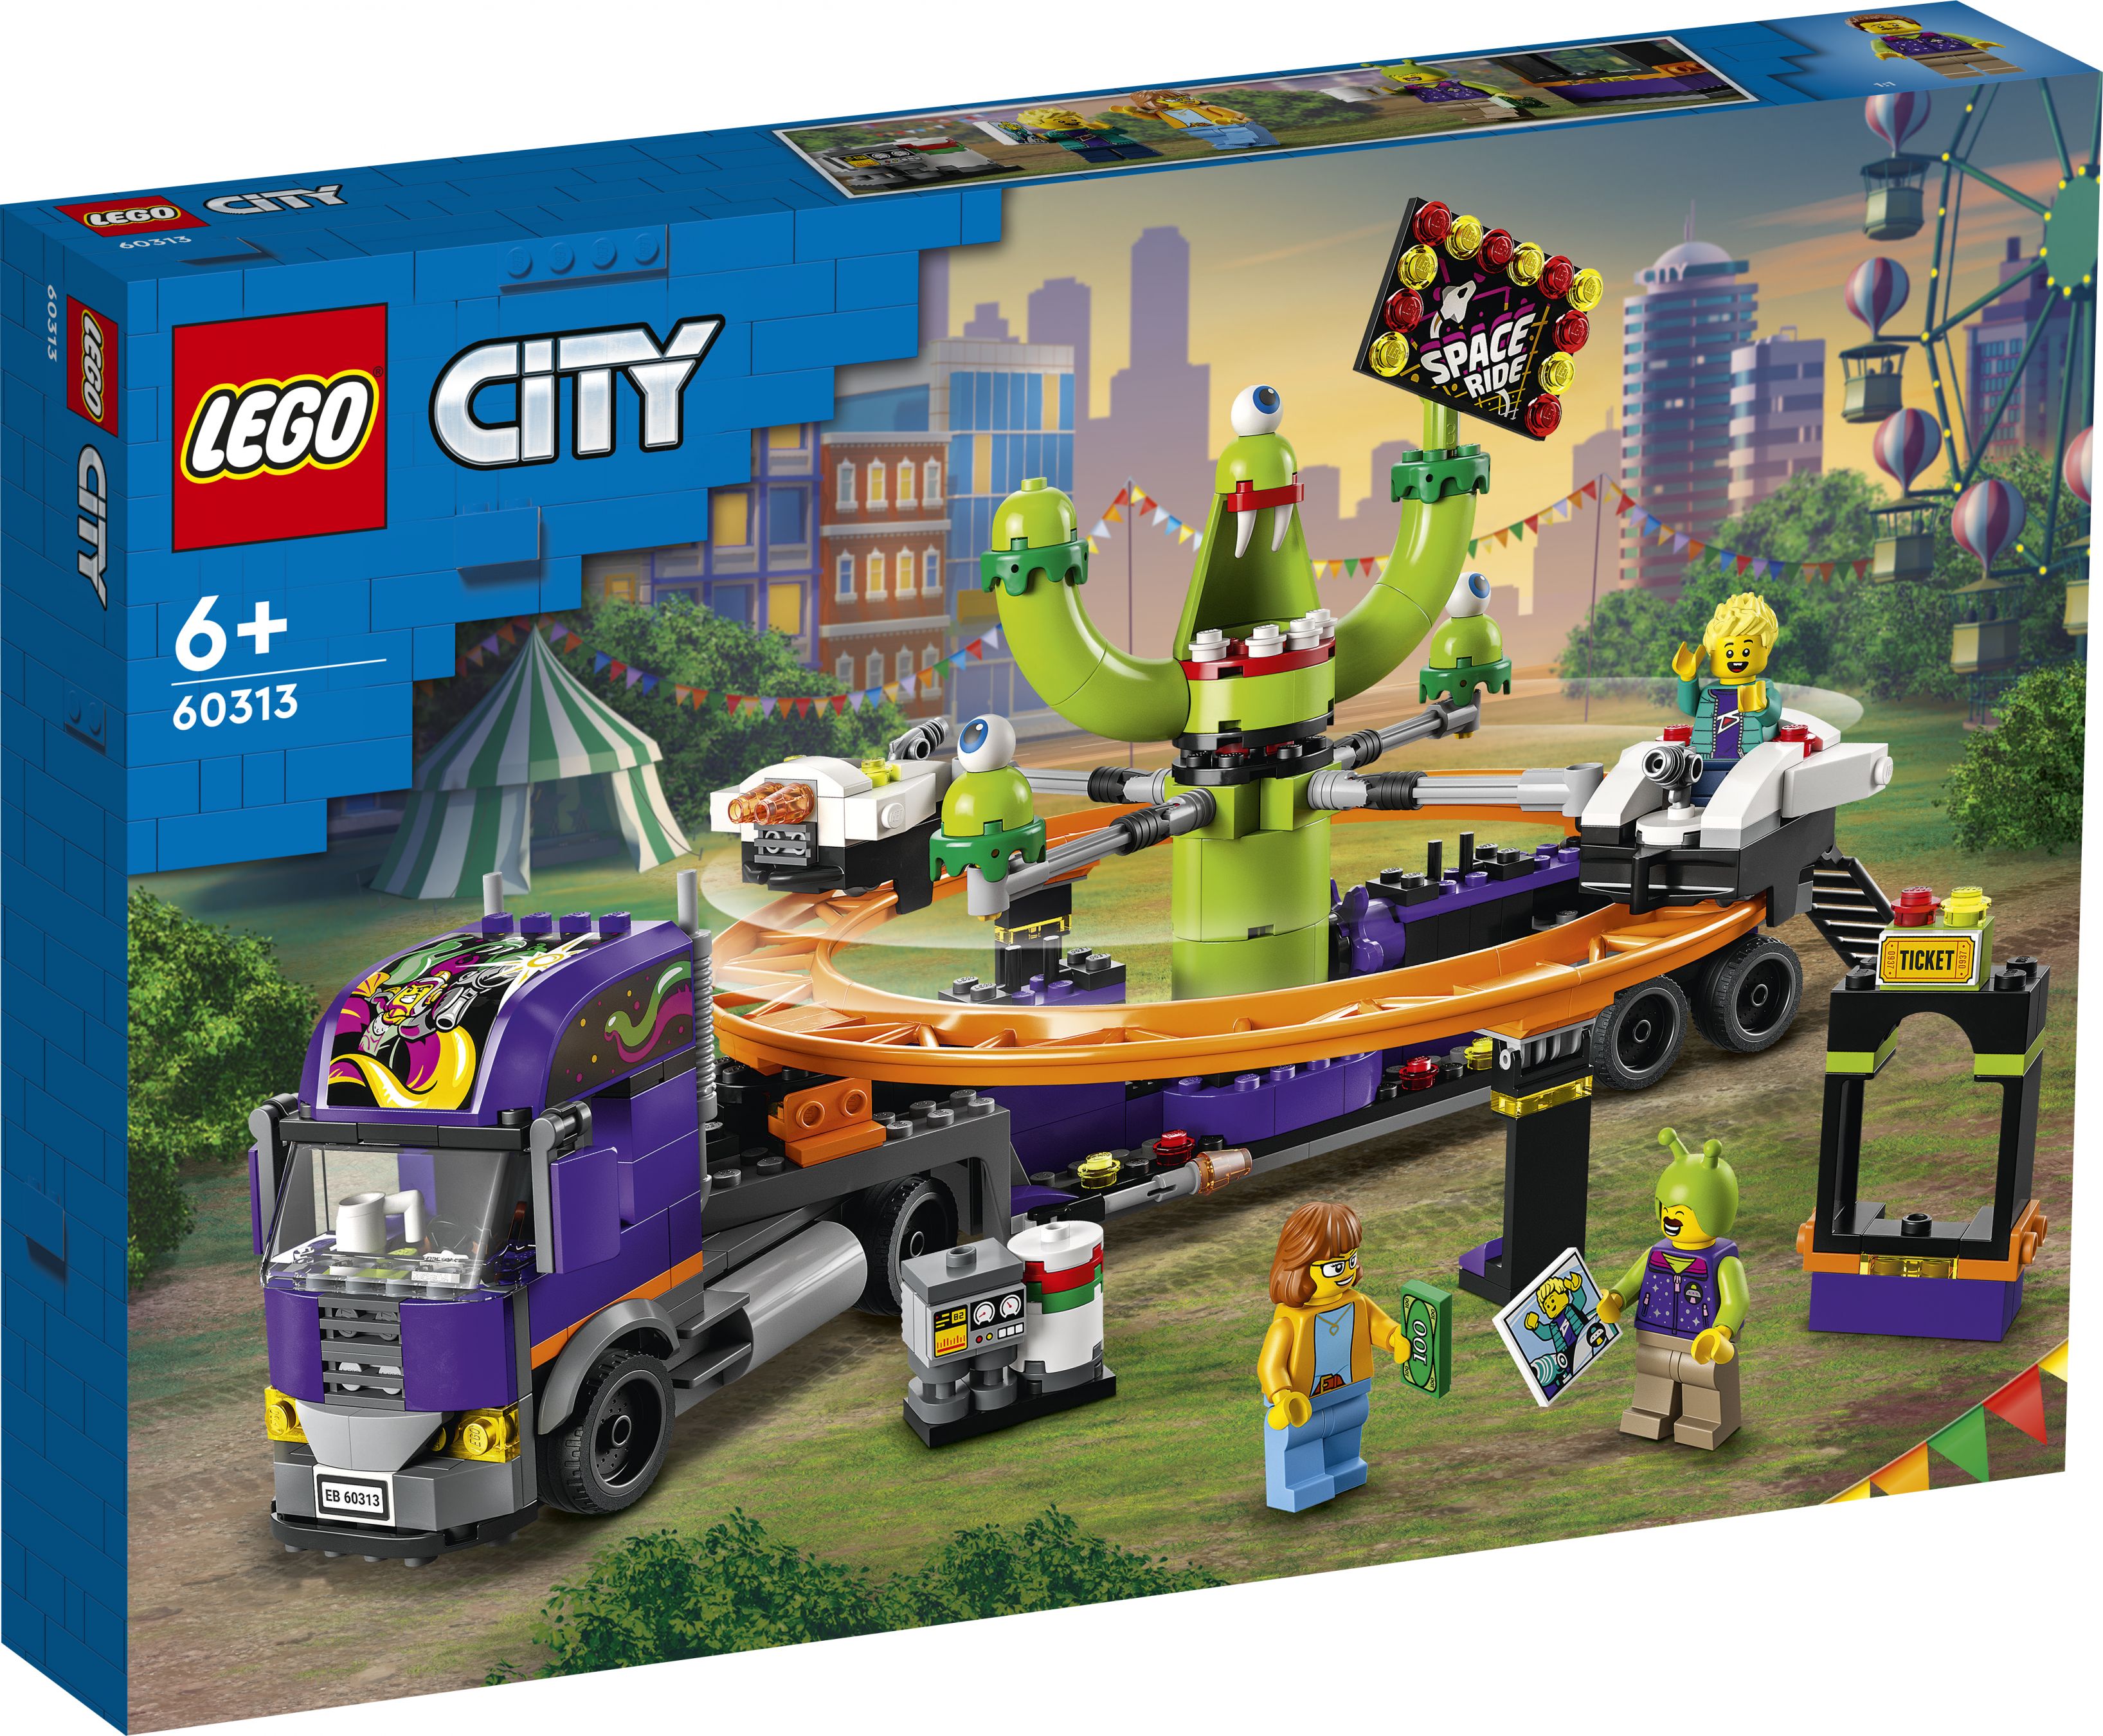 LEGO City 60313 LKW mit Weltraumkarussell LEGO_60313_Box1_V29.jpg